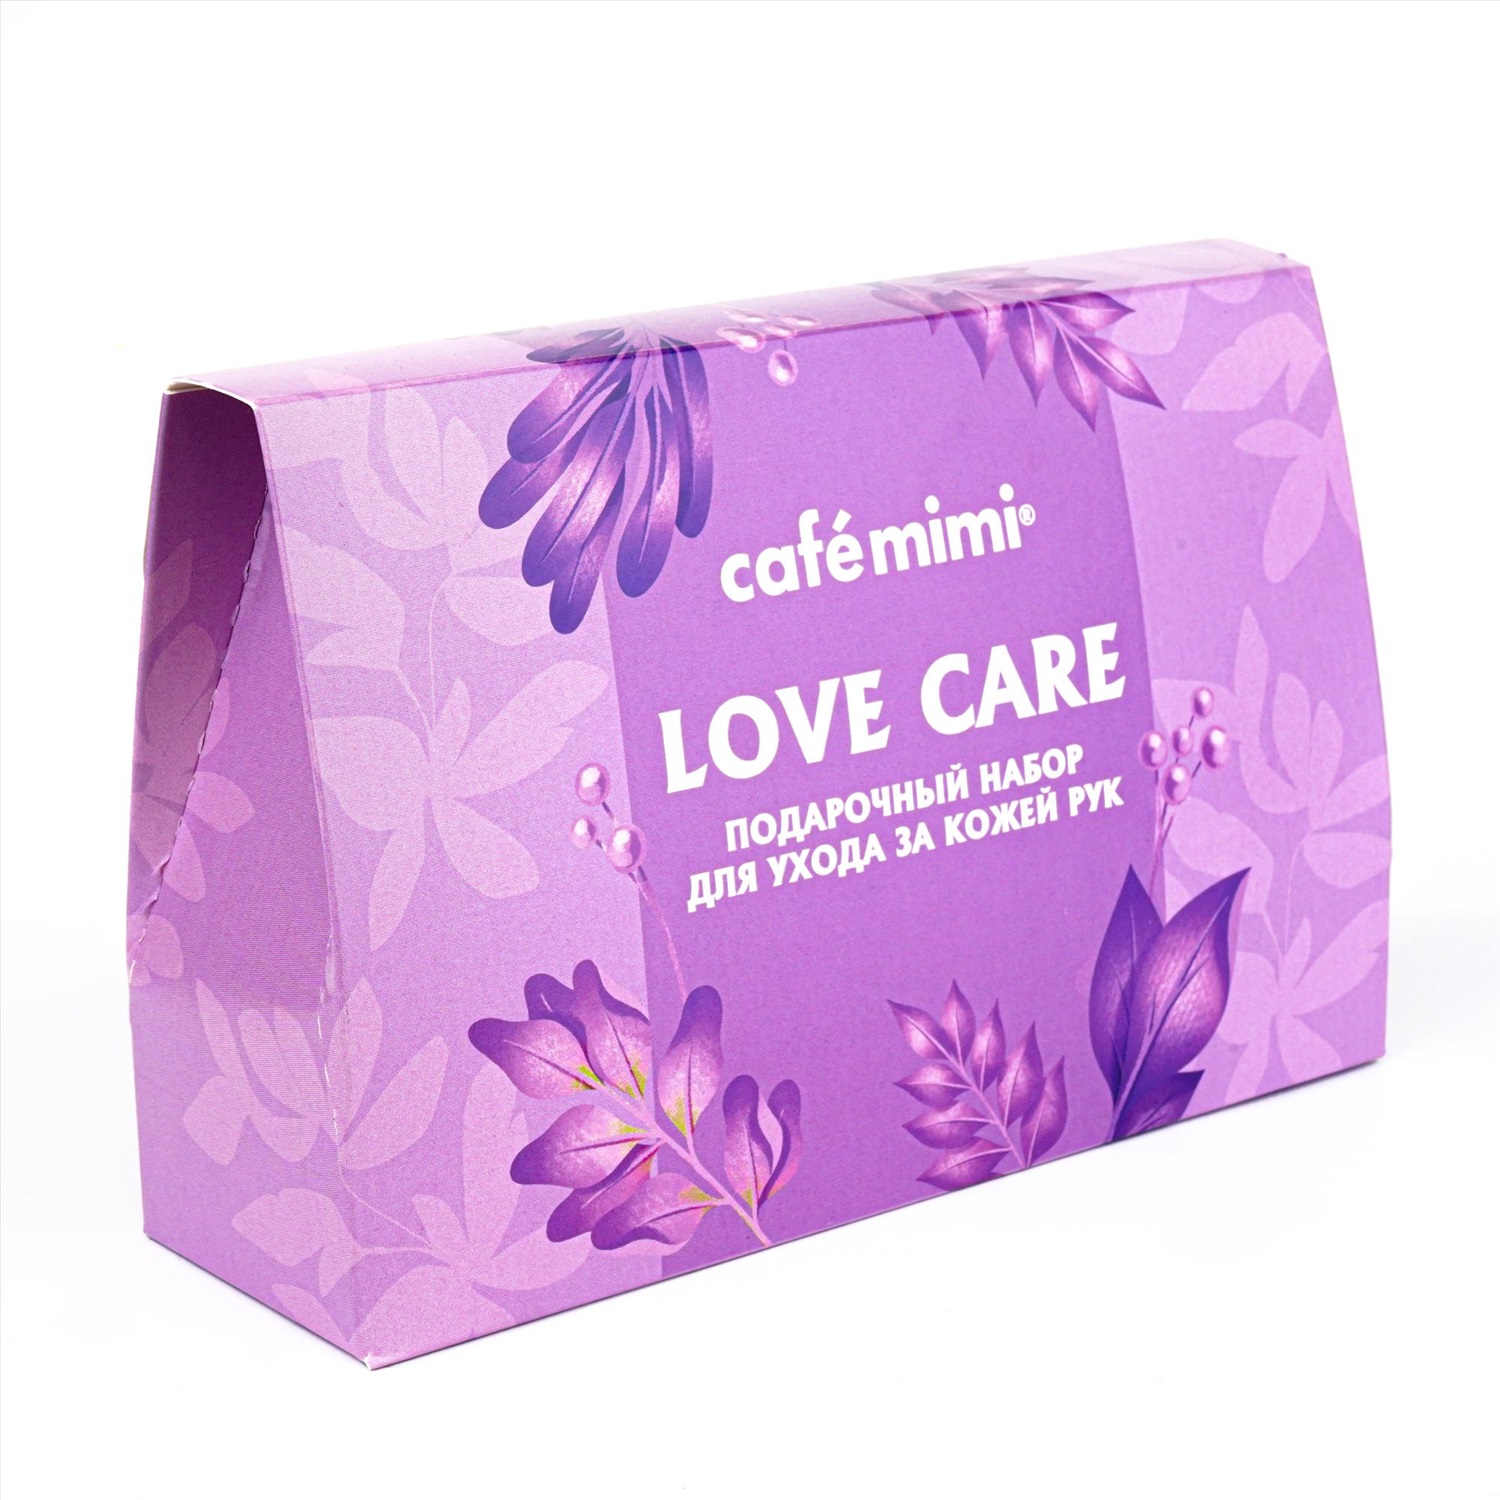 Набор mimi. Крем для рук кафе Мими 50 мл. Cafe Mimi подарочный набор Love Care. Подарочный набор для рук кафе Мими. Набор мини кремов для рук.